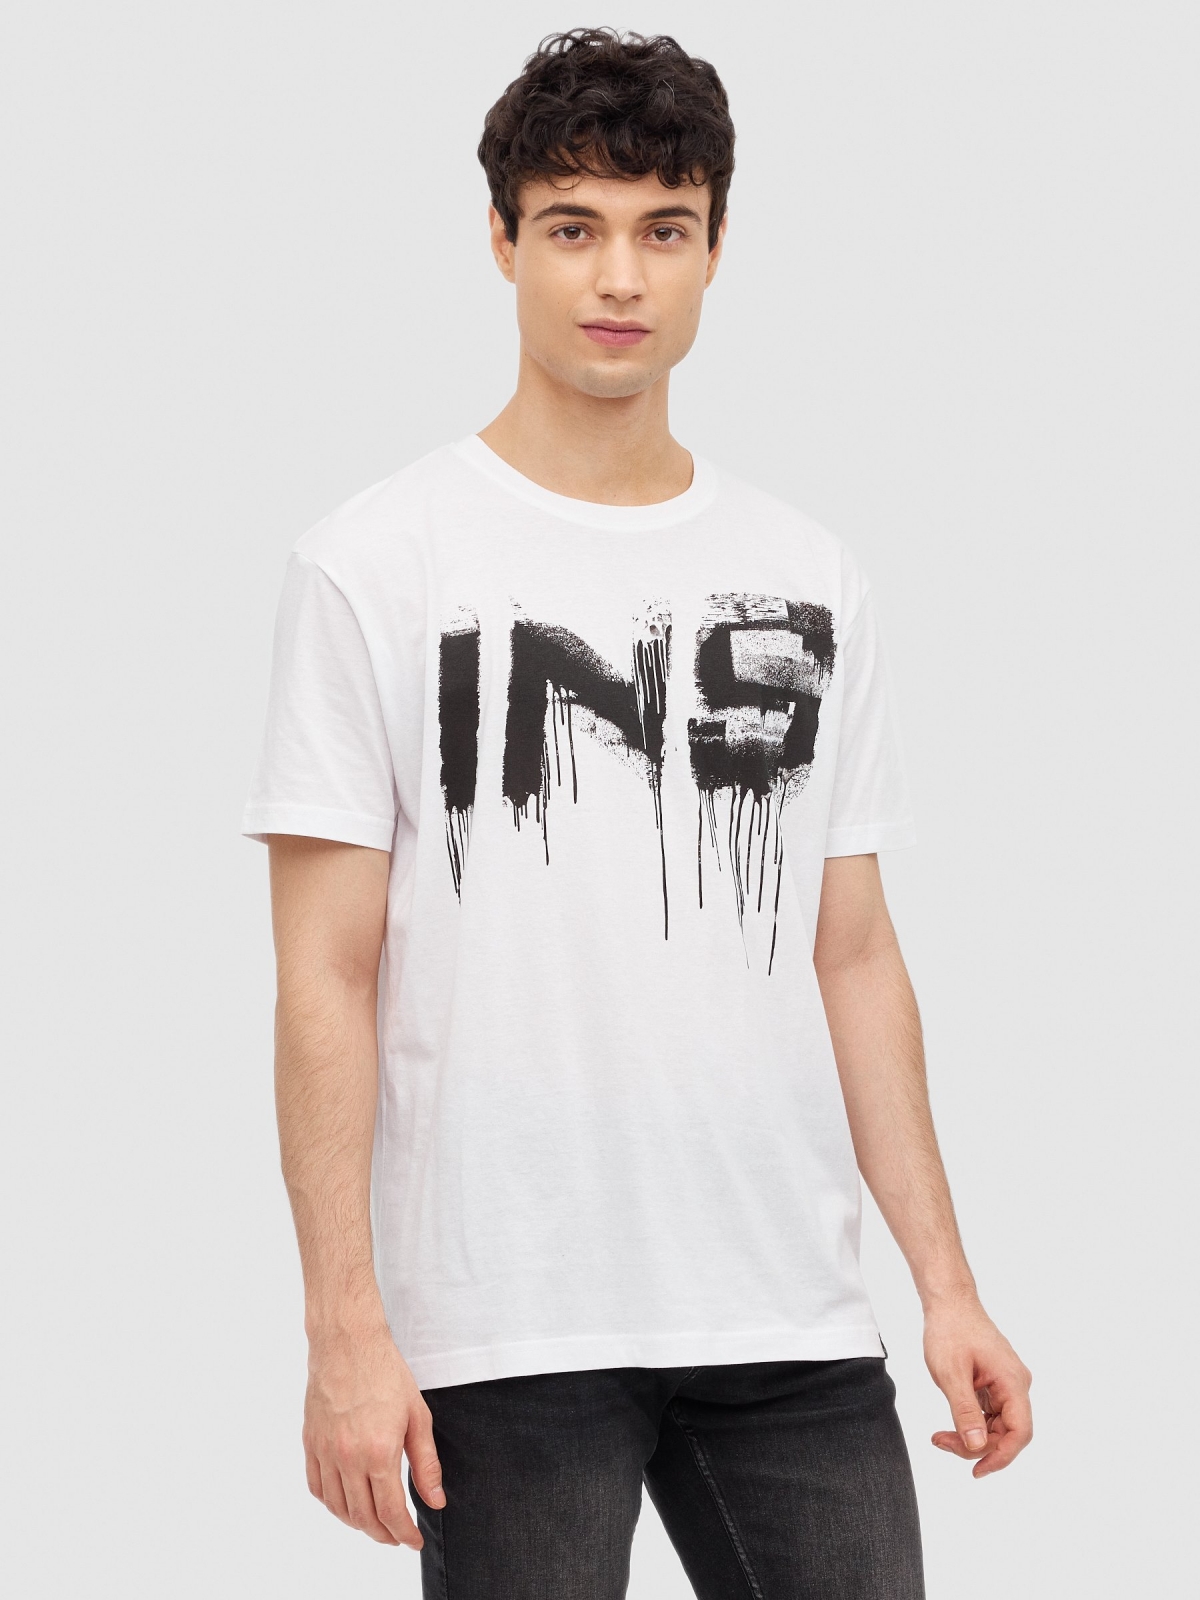 Camiseta INSIDE spray blanco vista media frontal